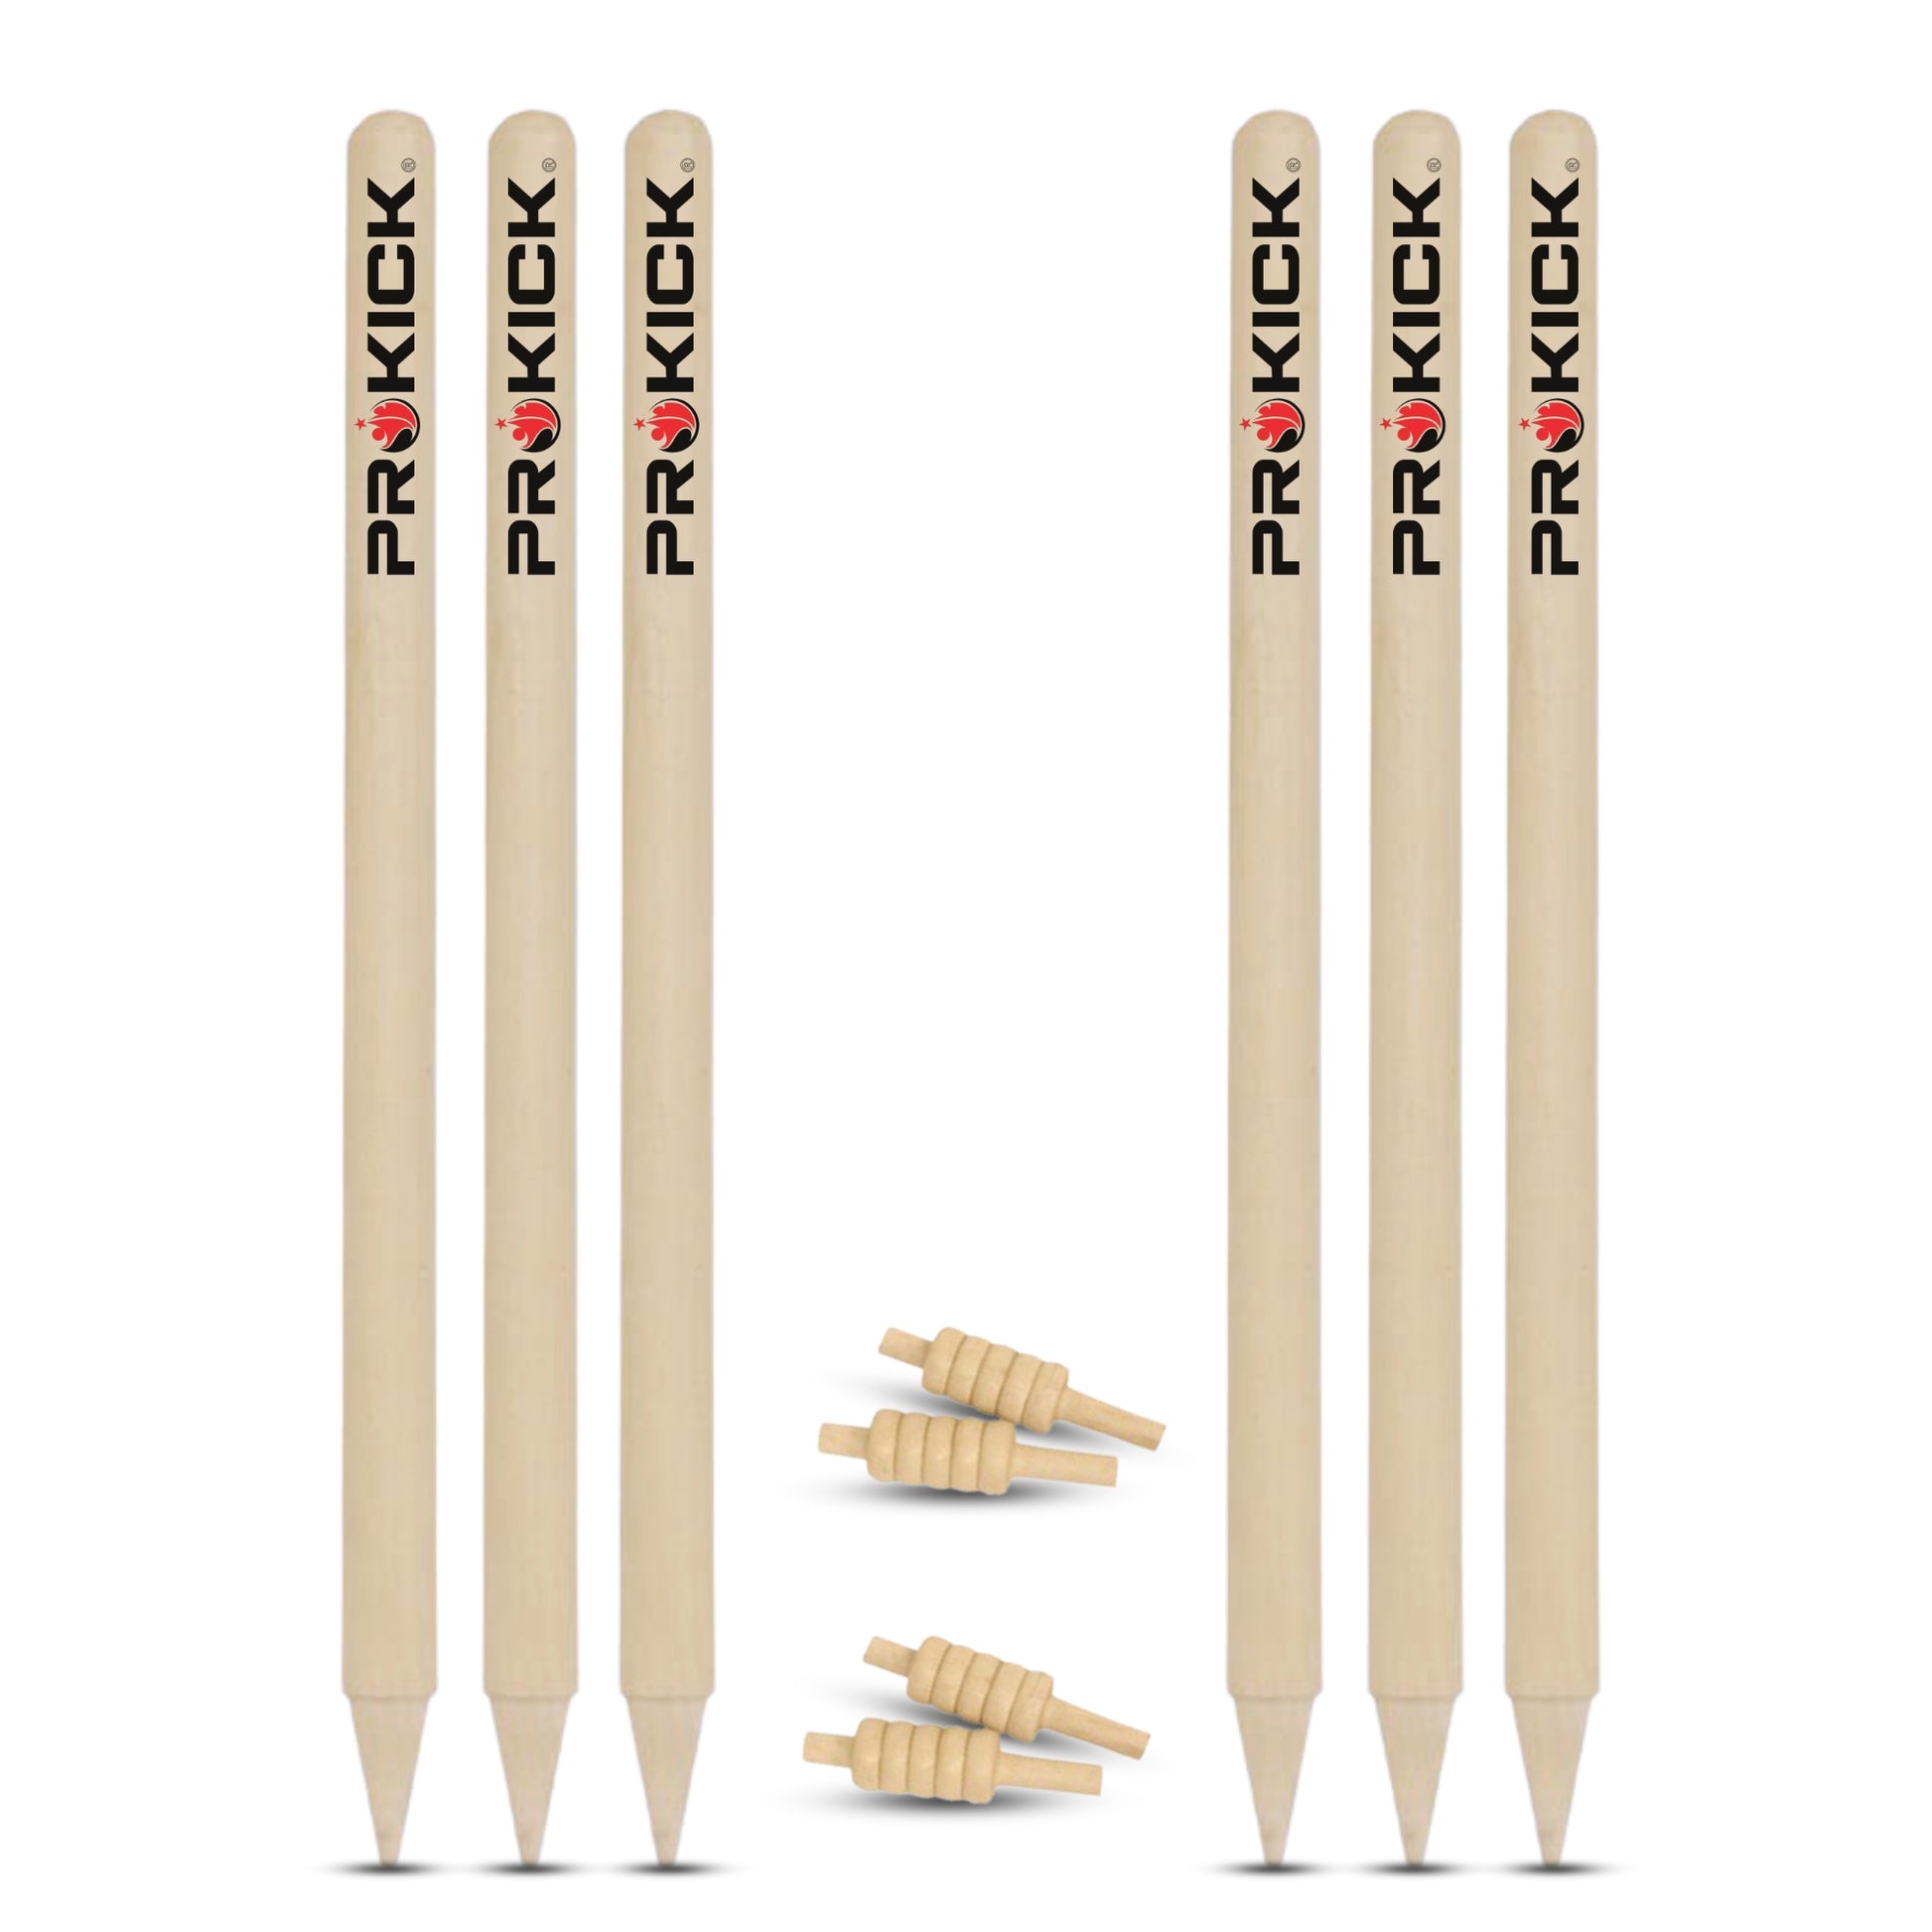 Prokick Wooden Cricket Stumps/Wickets with Bails (Pack of 6 Stumps/4 Bails) - Best Price online Prokicksports.com